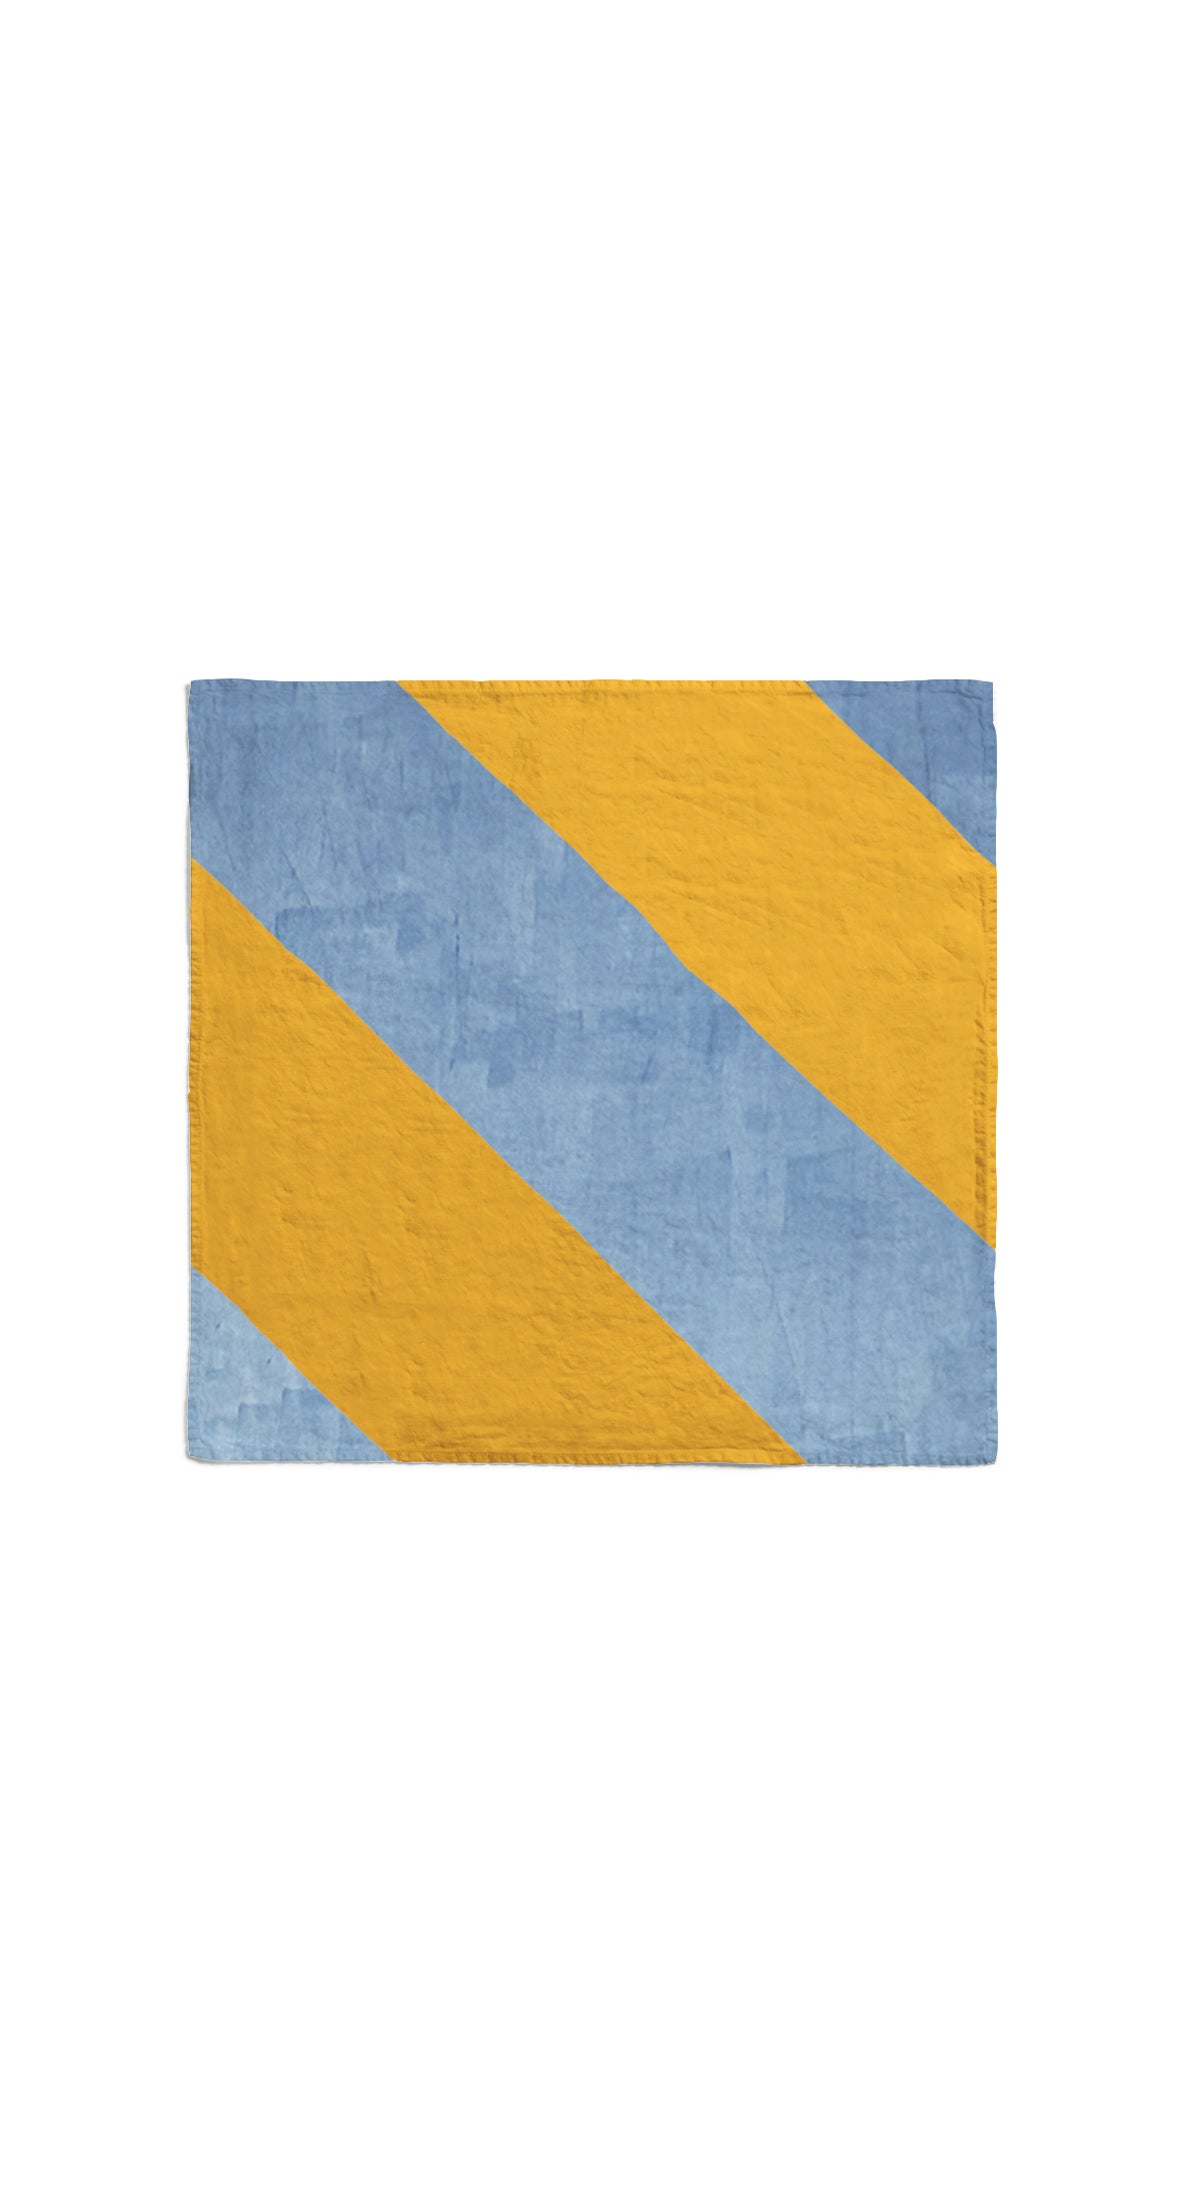 Stripe Linen Napkin in Mustard Yellow and Pale Blue, 50x50cm